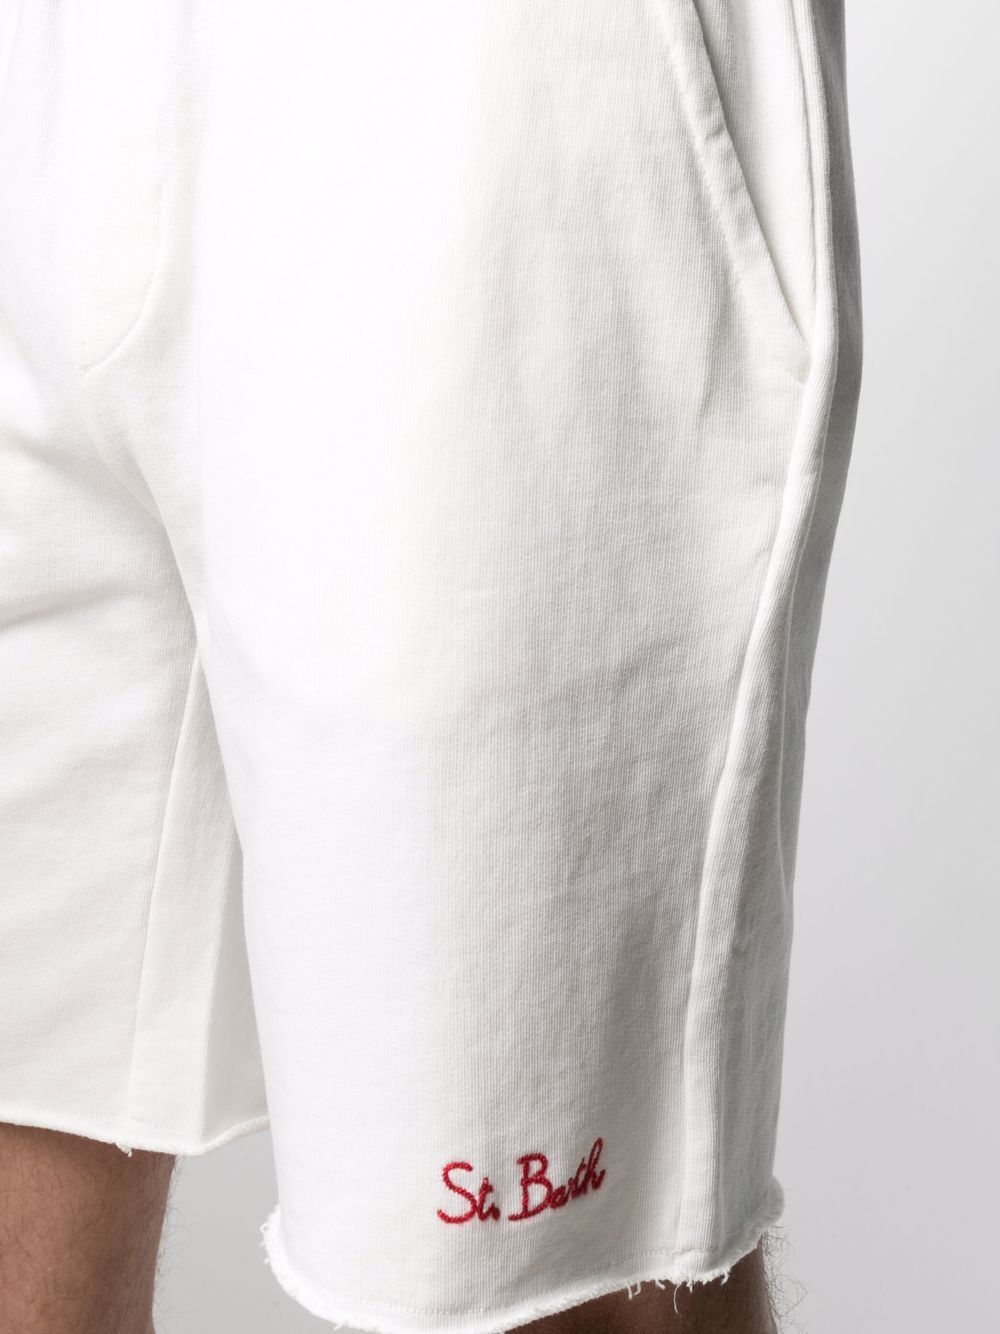 фото Mc2 saint barth шорты с вышитым логотипом